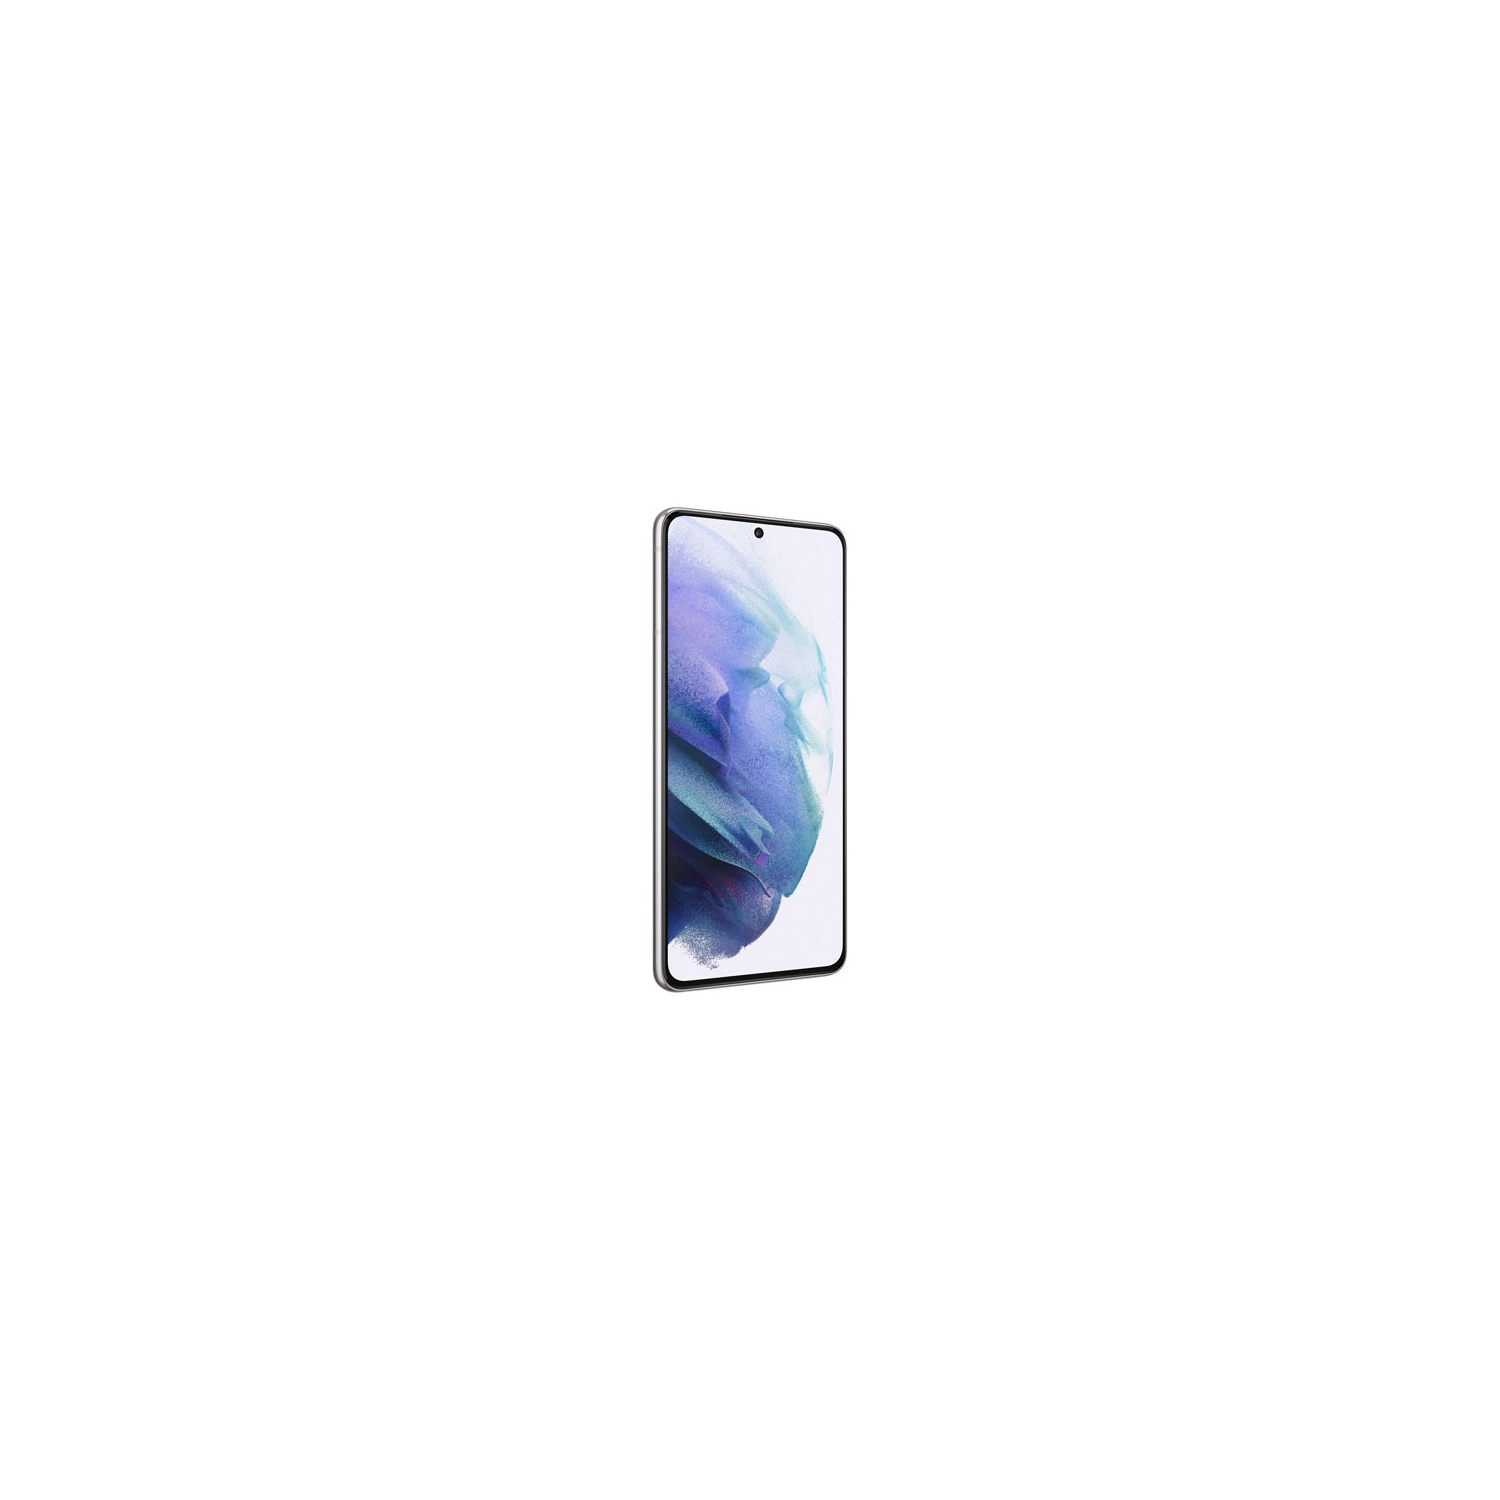 Refurbished (Excellent) - Samsung Galaxy S21 5G 128GB - Phantom White - Unlocked